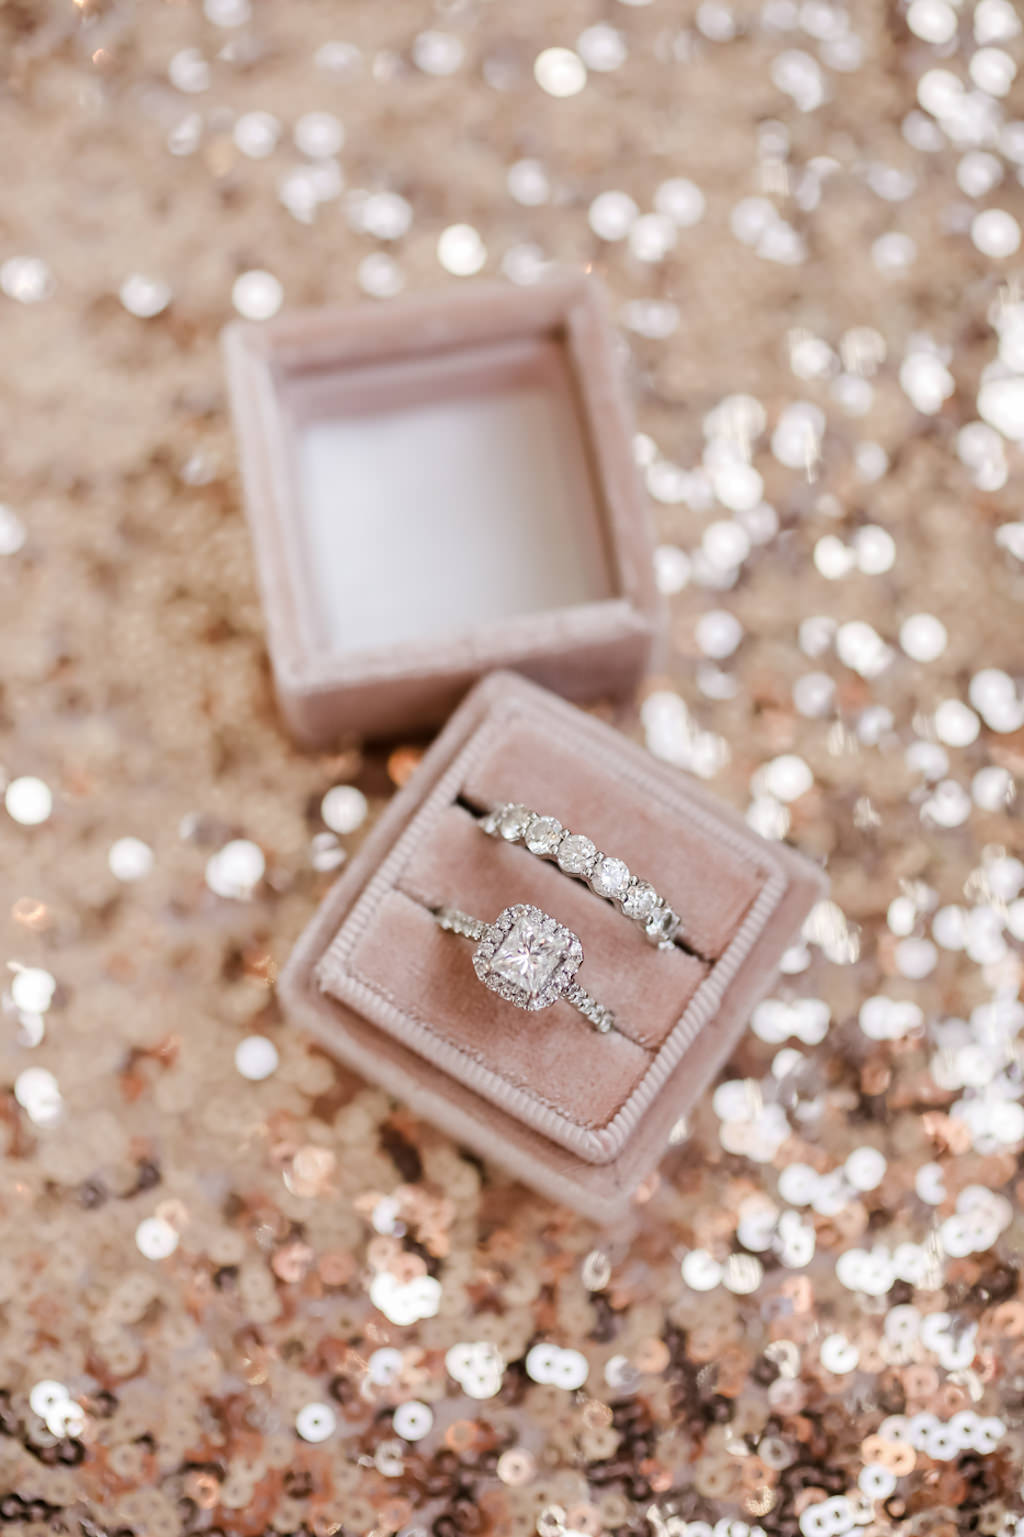 Princess Cut and Halo Engagement Ring and Diamond Bride Wedding Band in Velvet Blush Pink Ringbox | Tampa Bay Wedding Photographer Lifelong Photography Studio